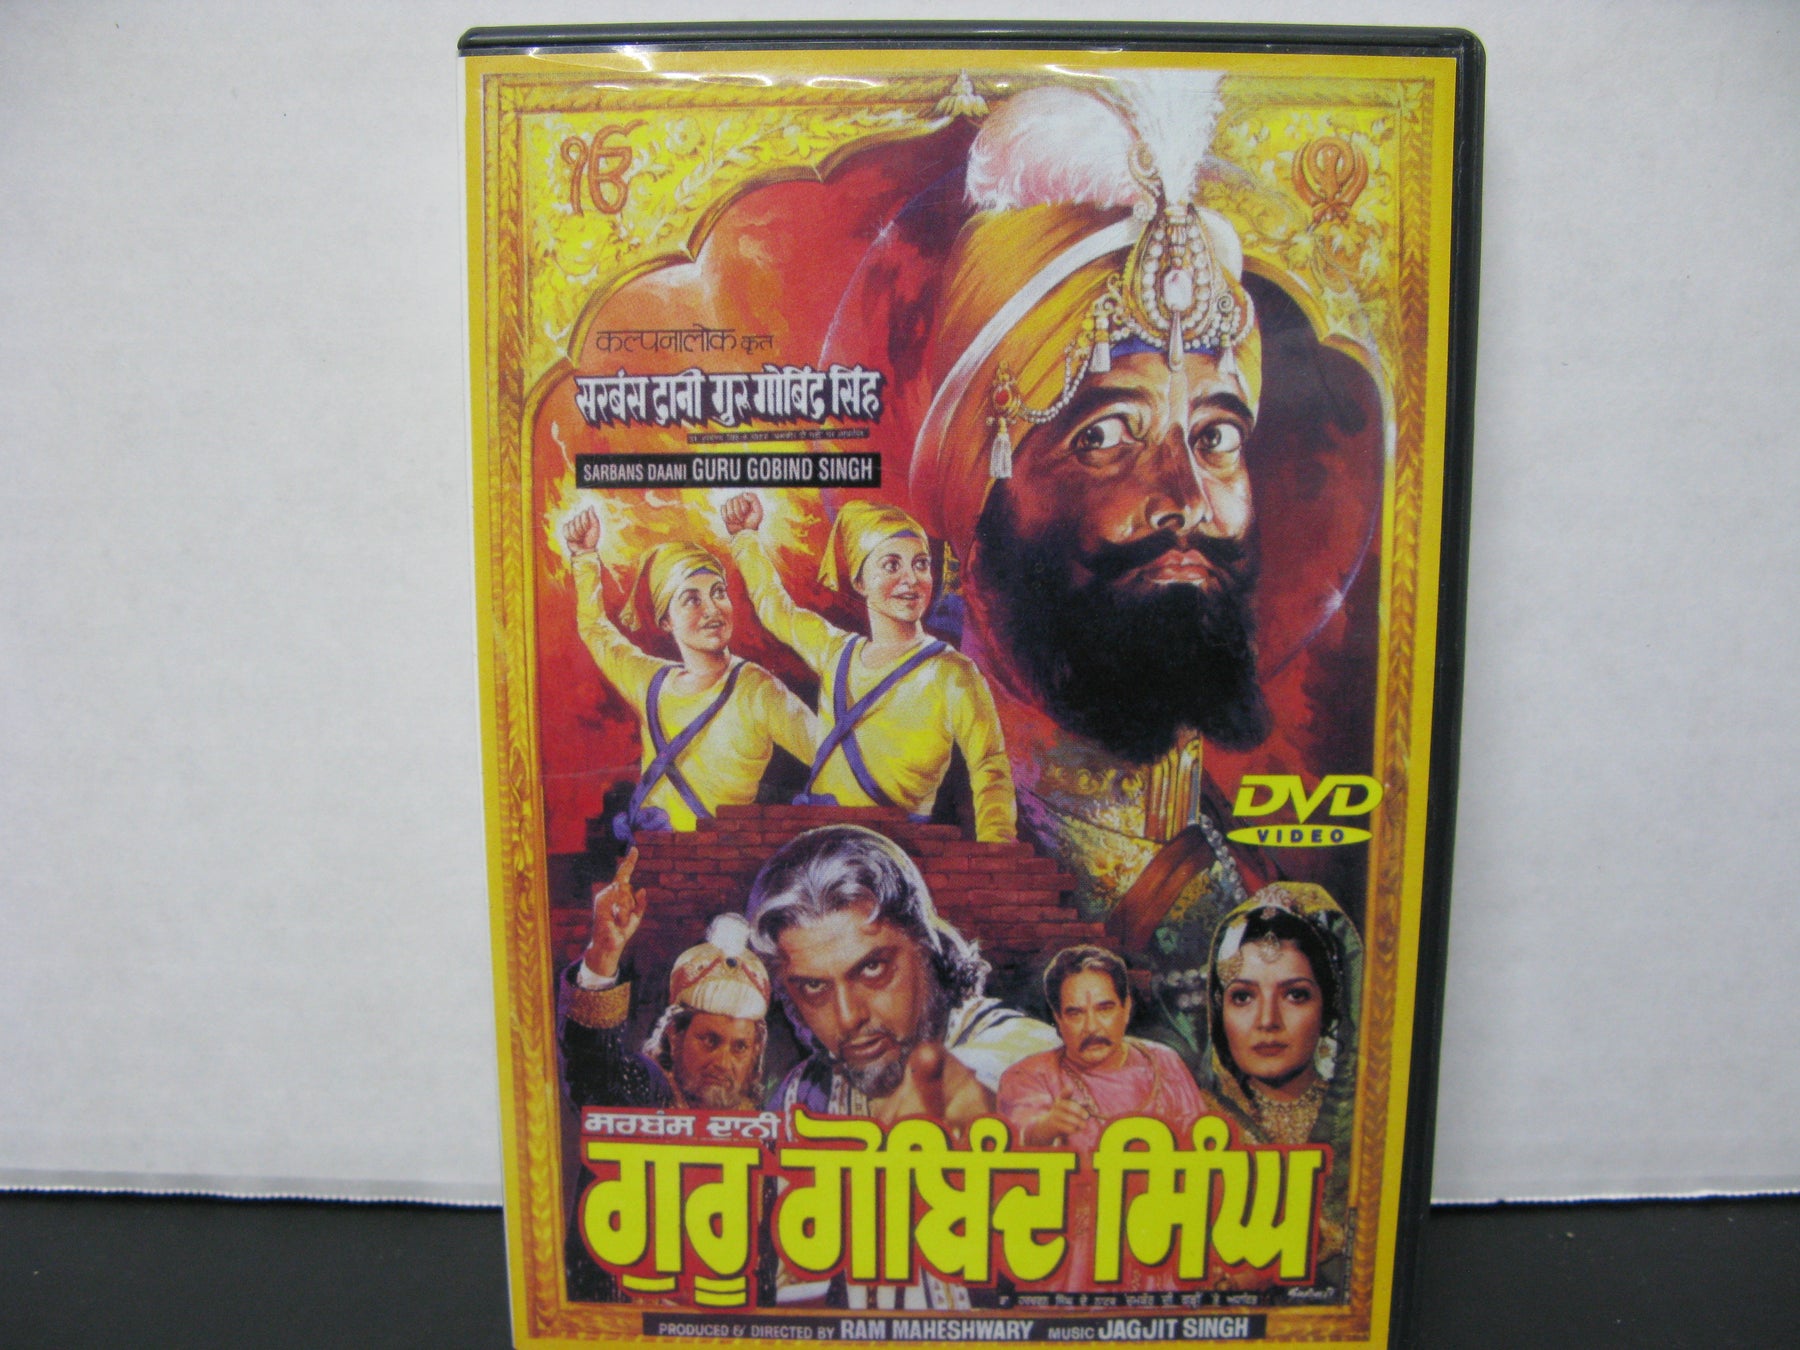 Sarabans Daani Guru Gobind Singh DVD